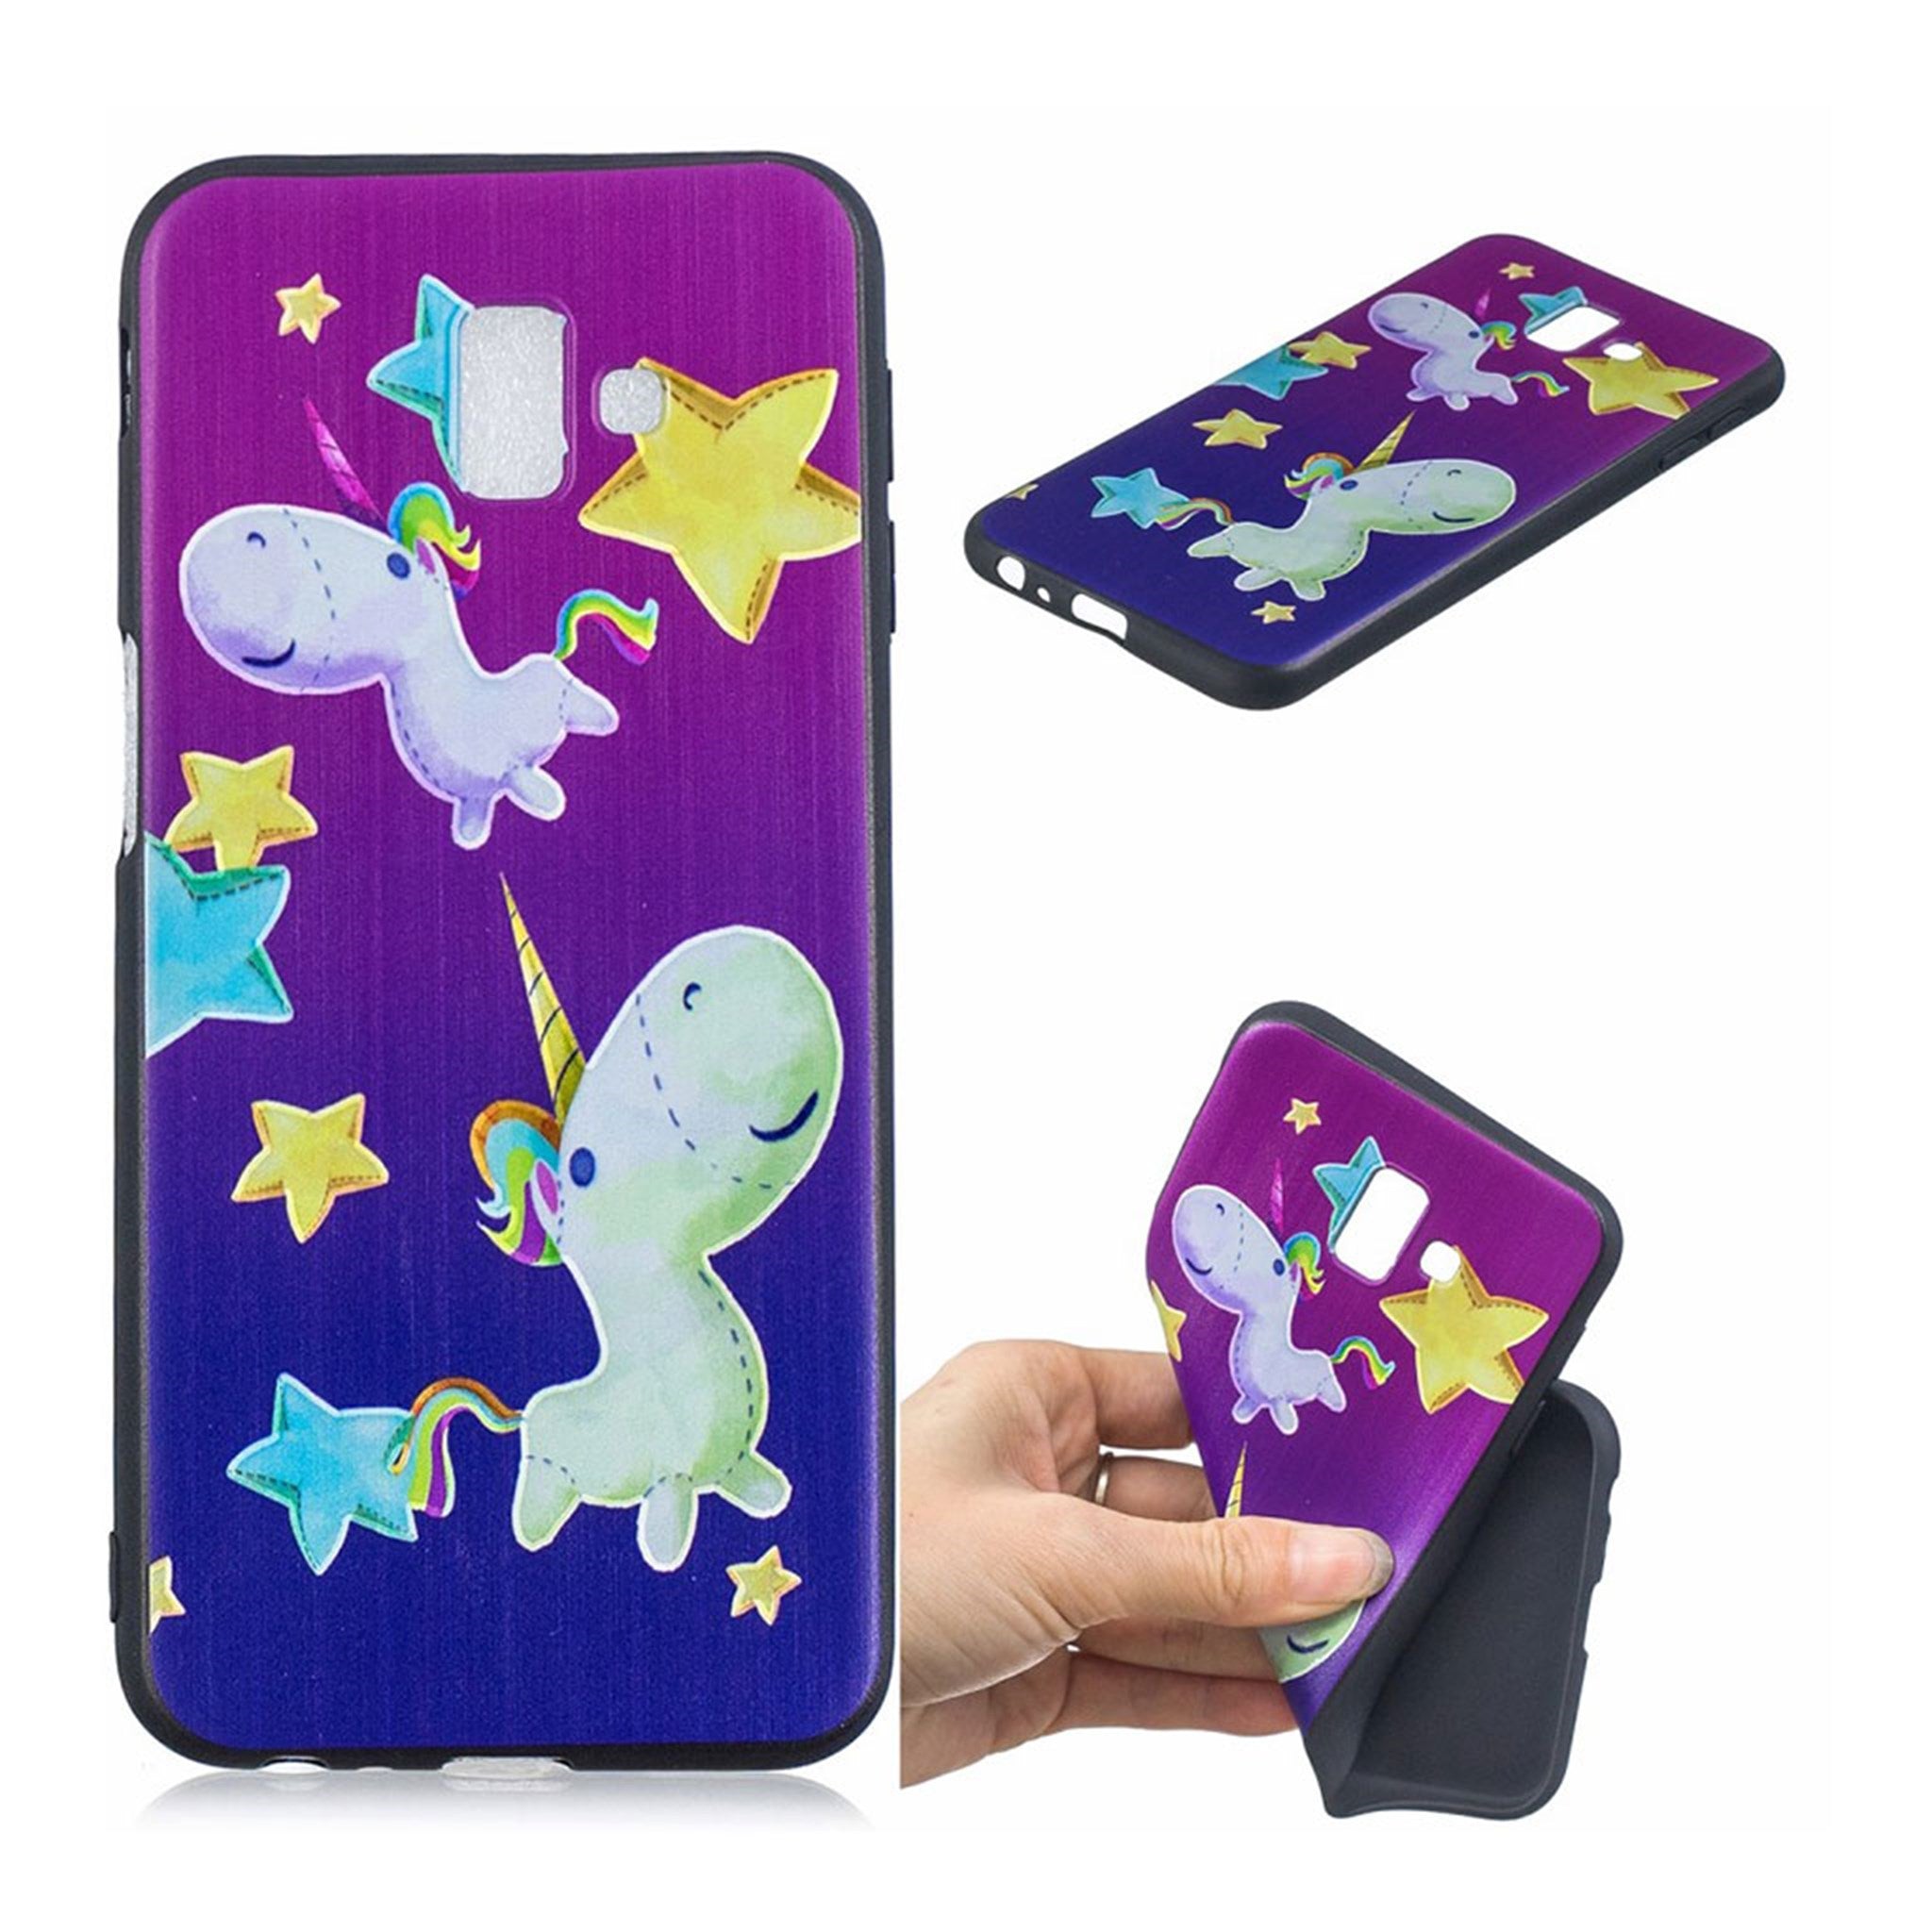 Samsung Galaxy J6 Plus (2018) patterned soft case - Star and Unicorn